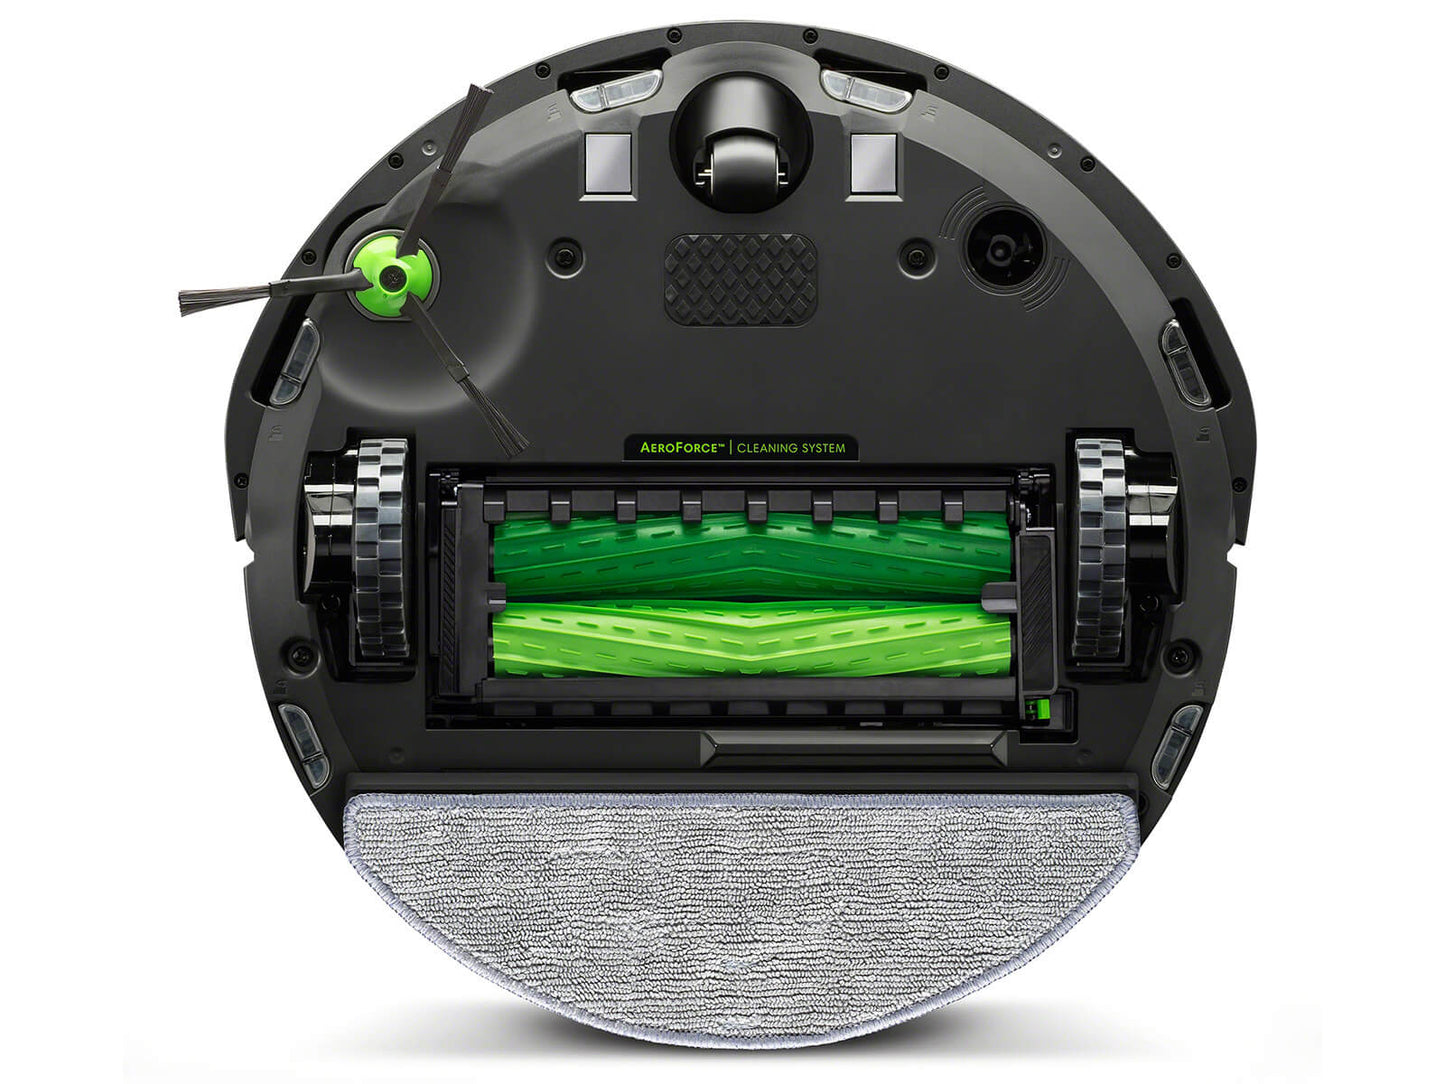 Roomba Combo® i8+ robotdammsugare